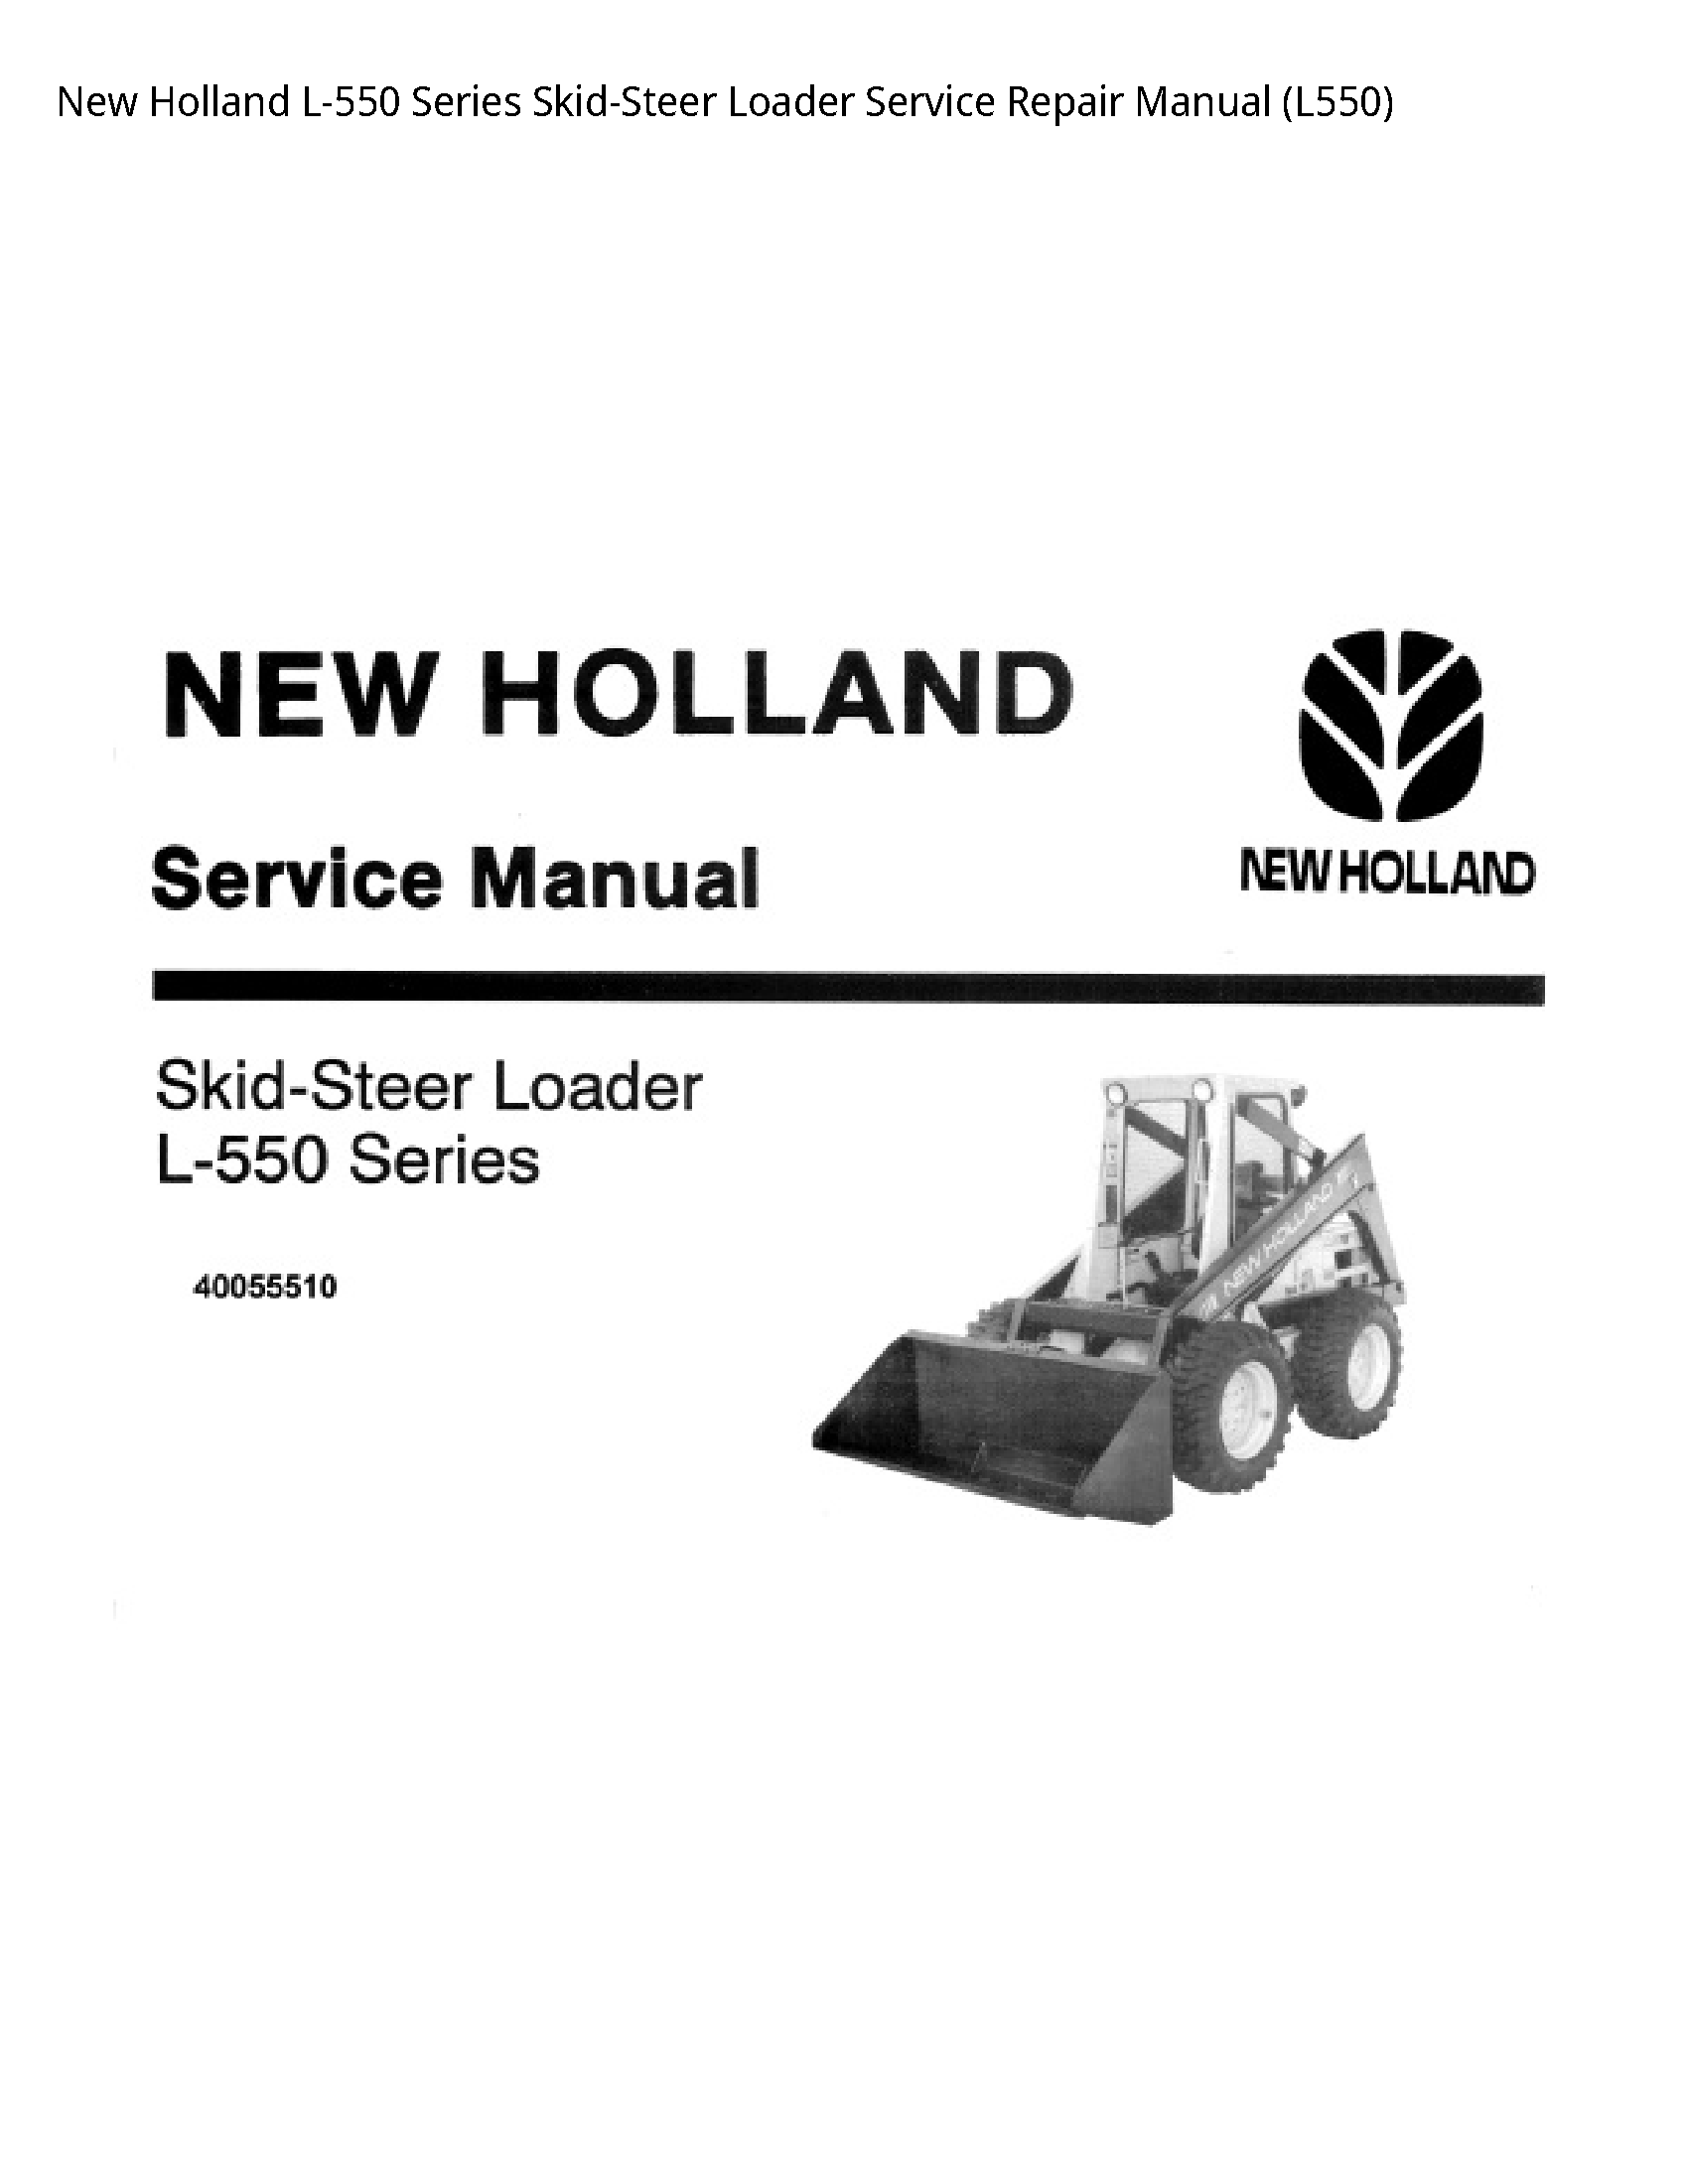 New Holland L-550 Series Skid-Steer Loader manual